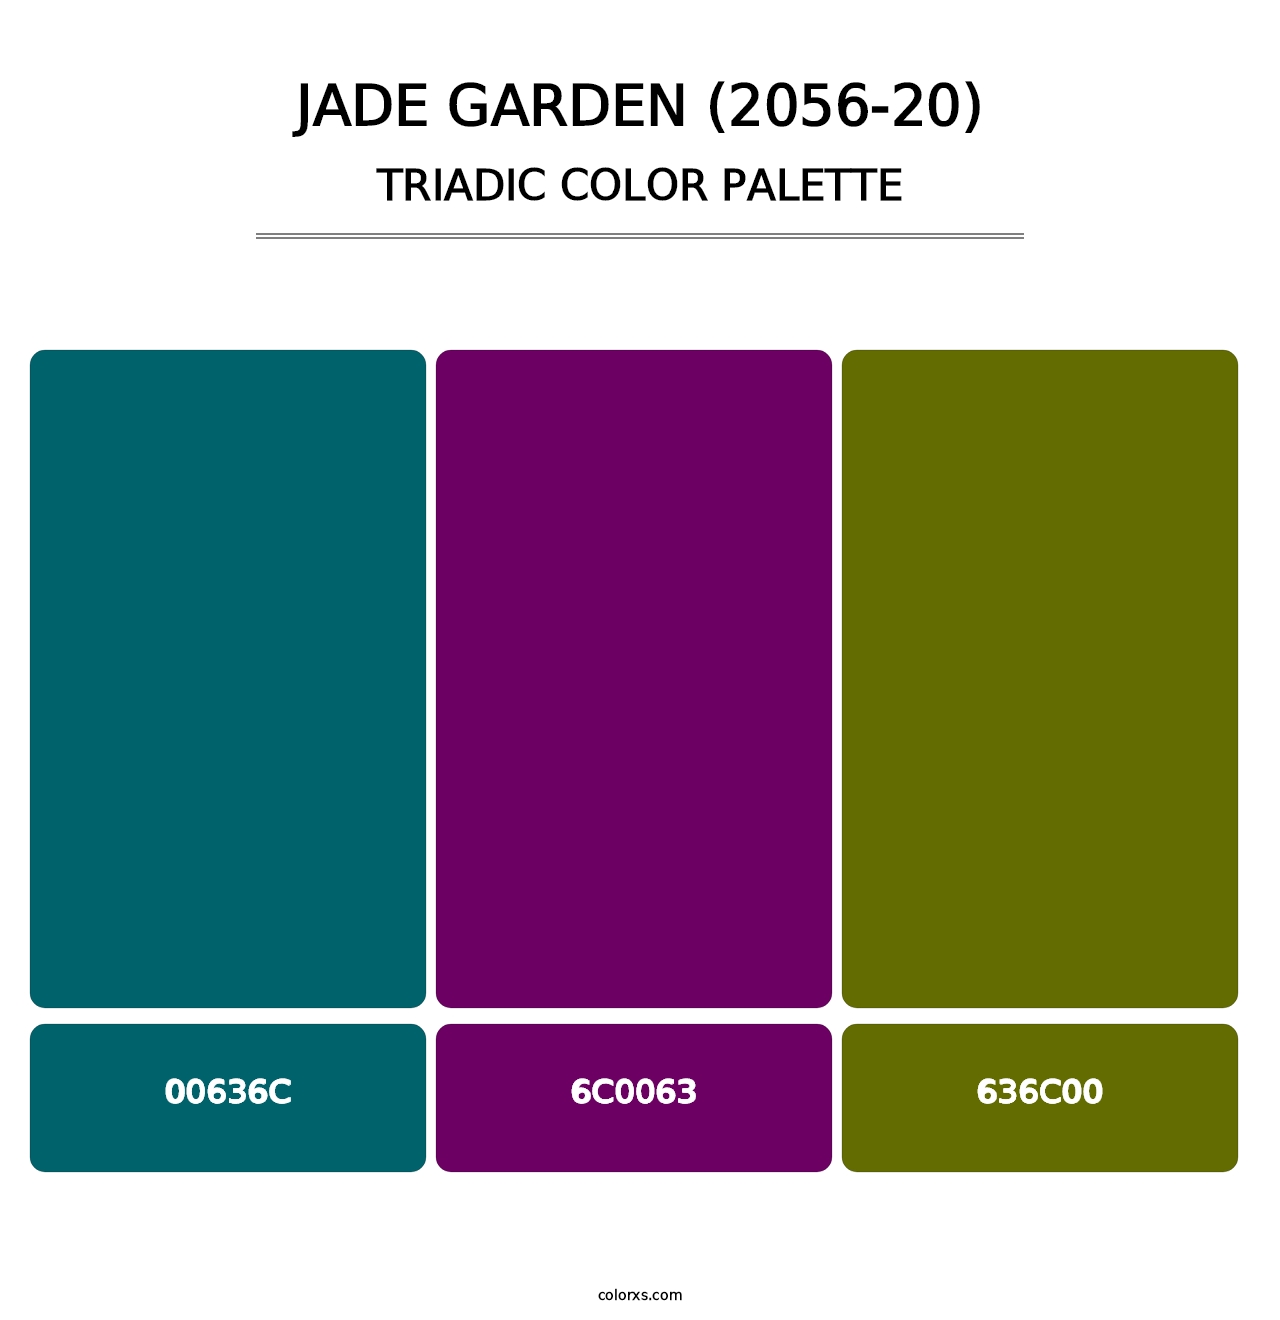 Jade Garden (2056-20) - Triadic Color Palette